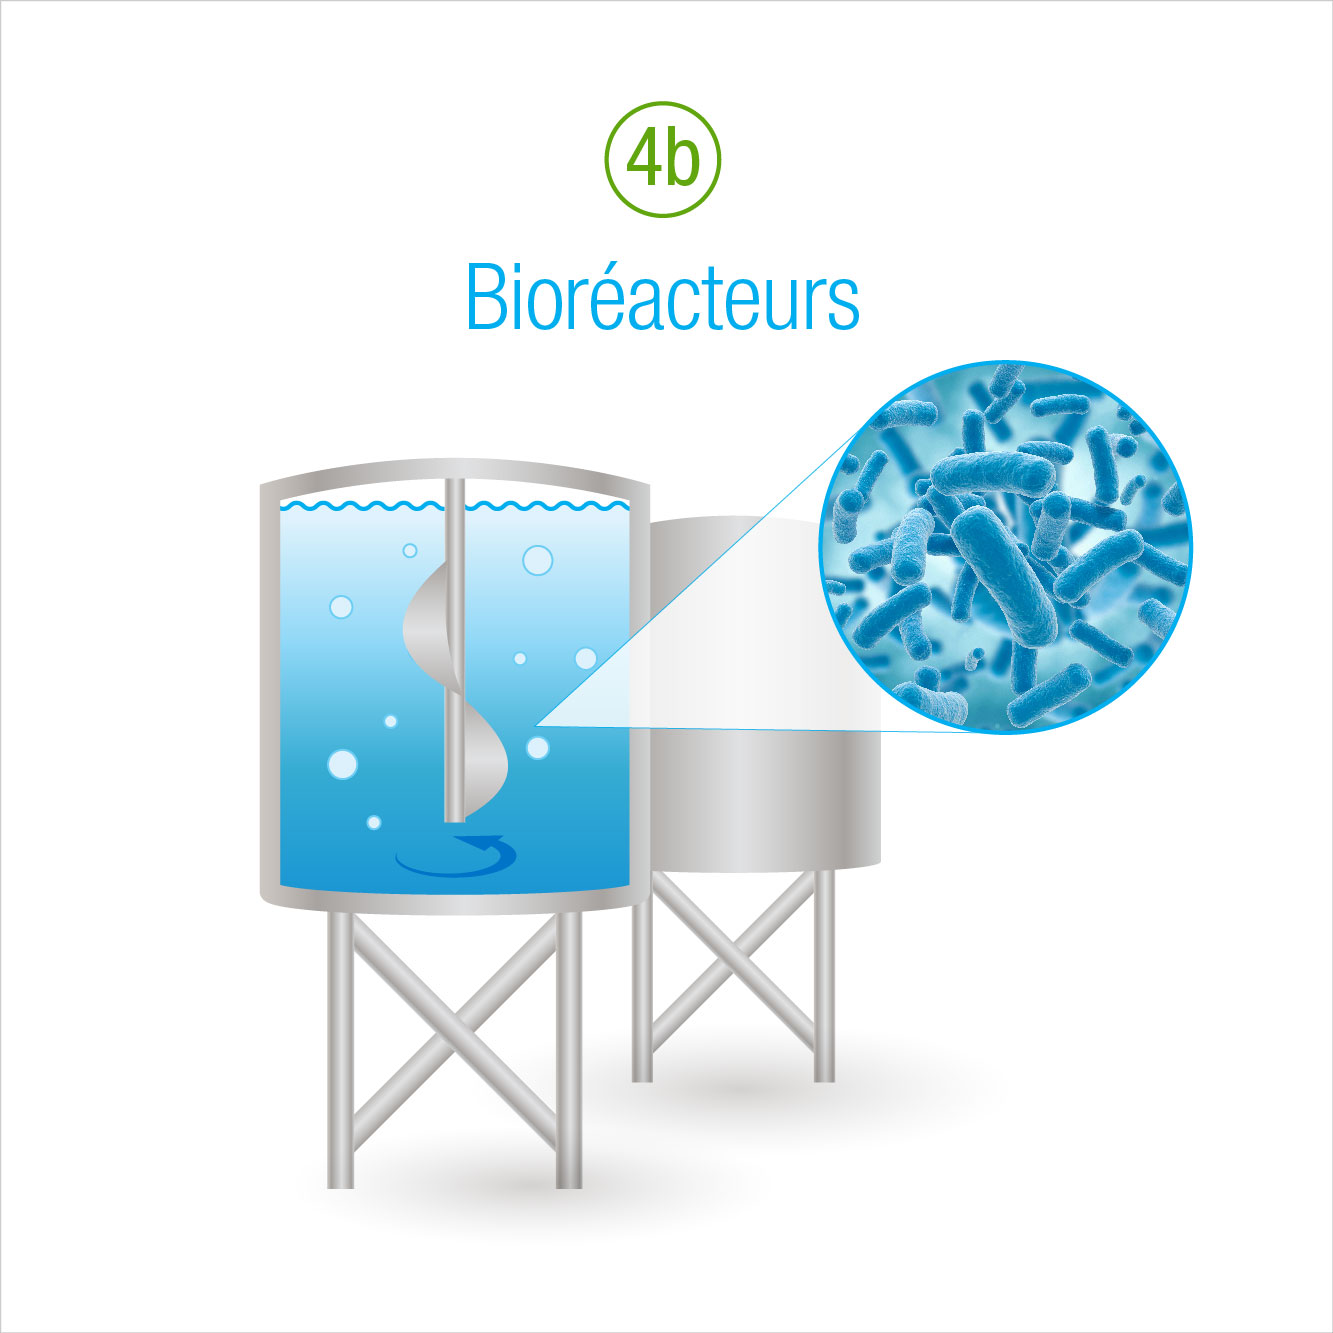 5b: Bioréacteurs